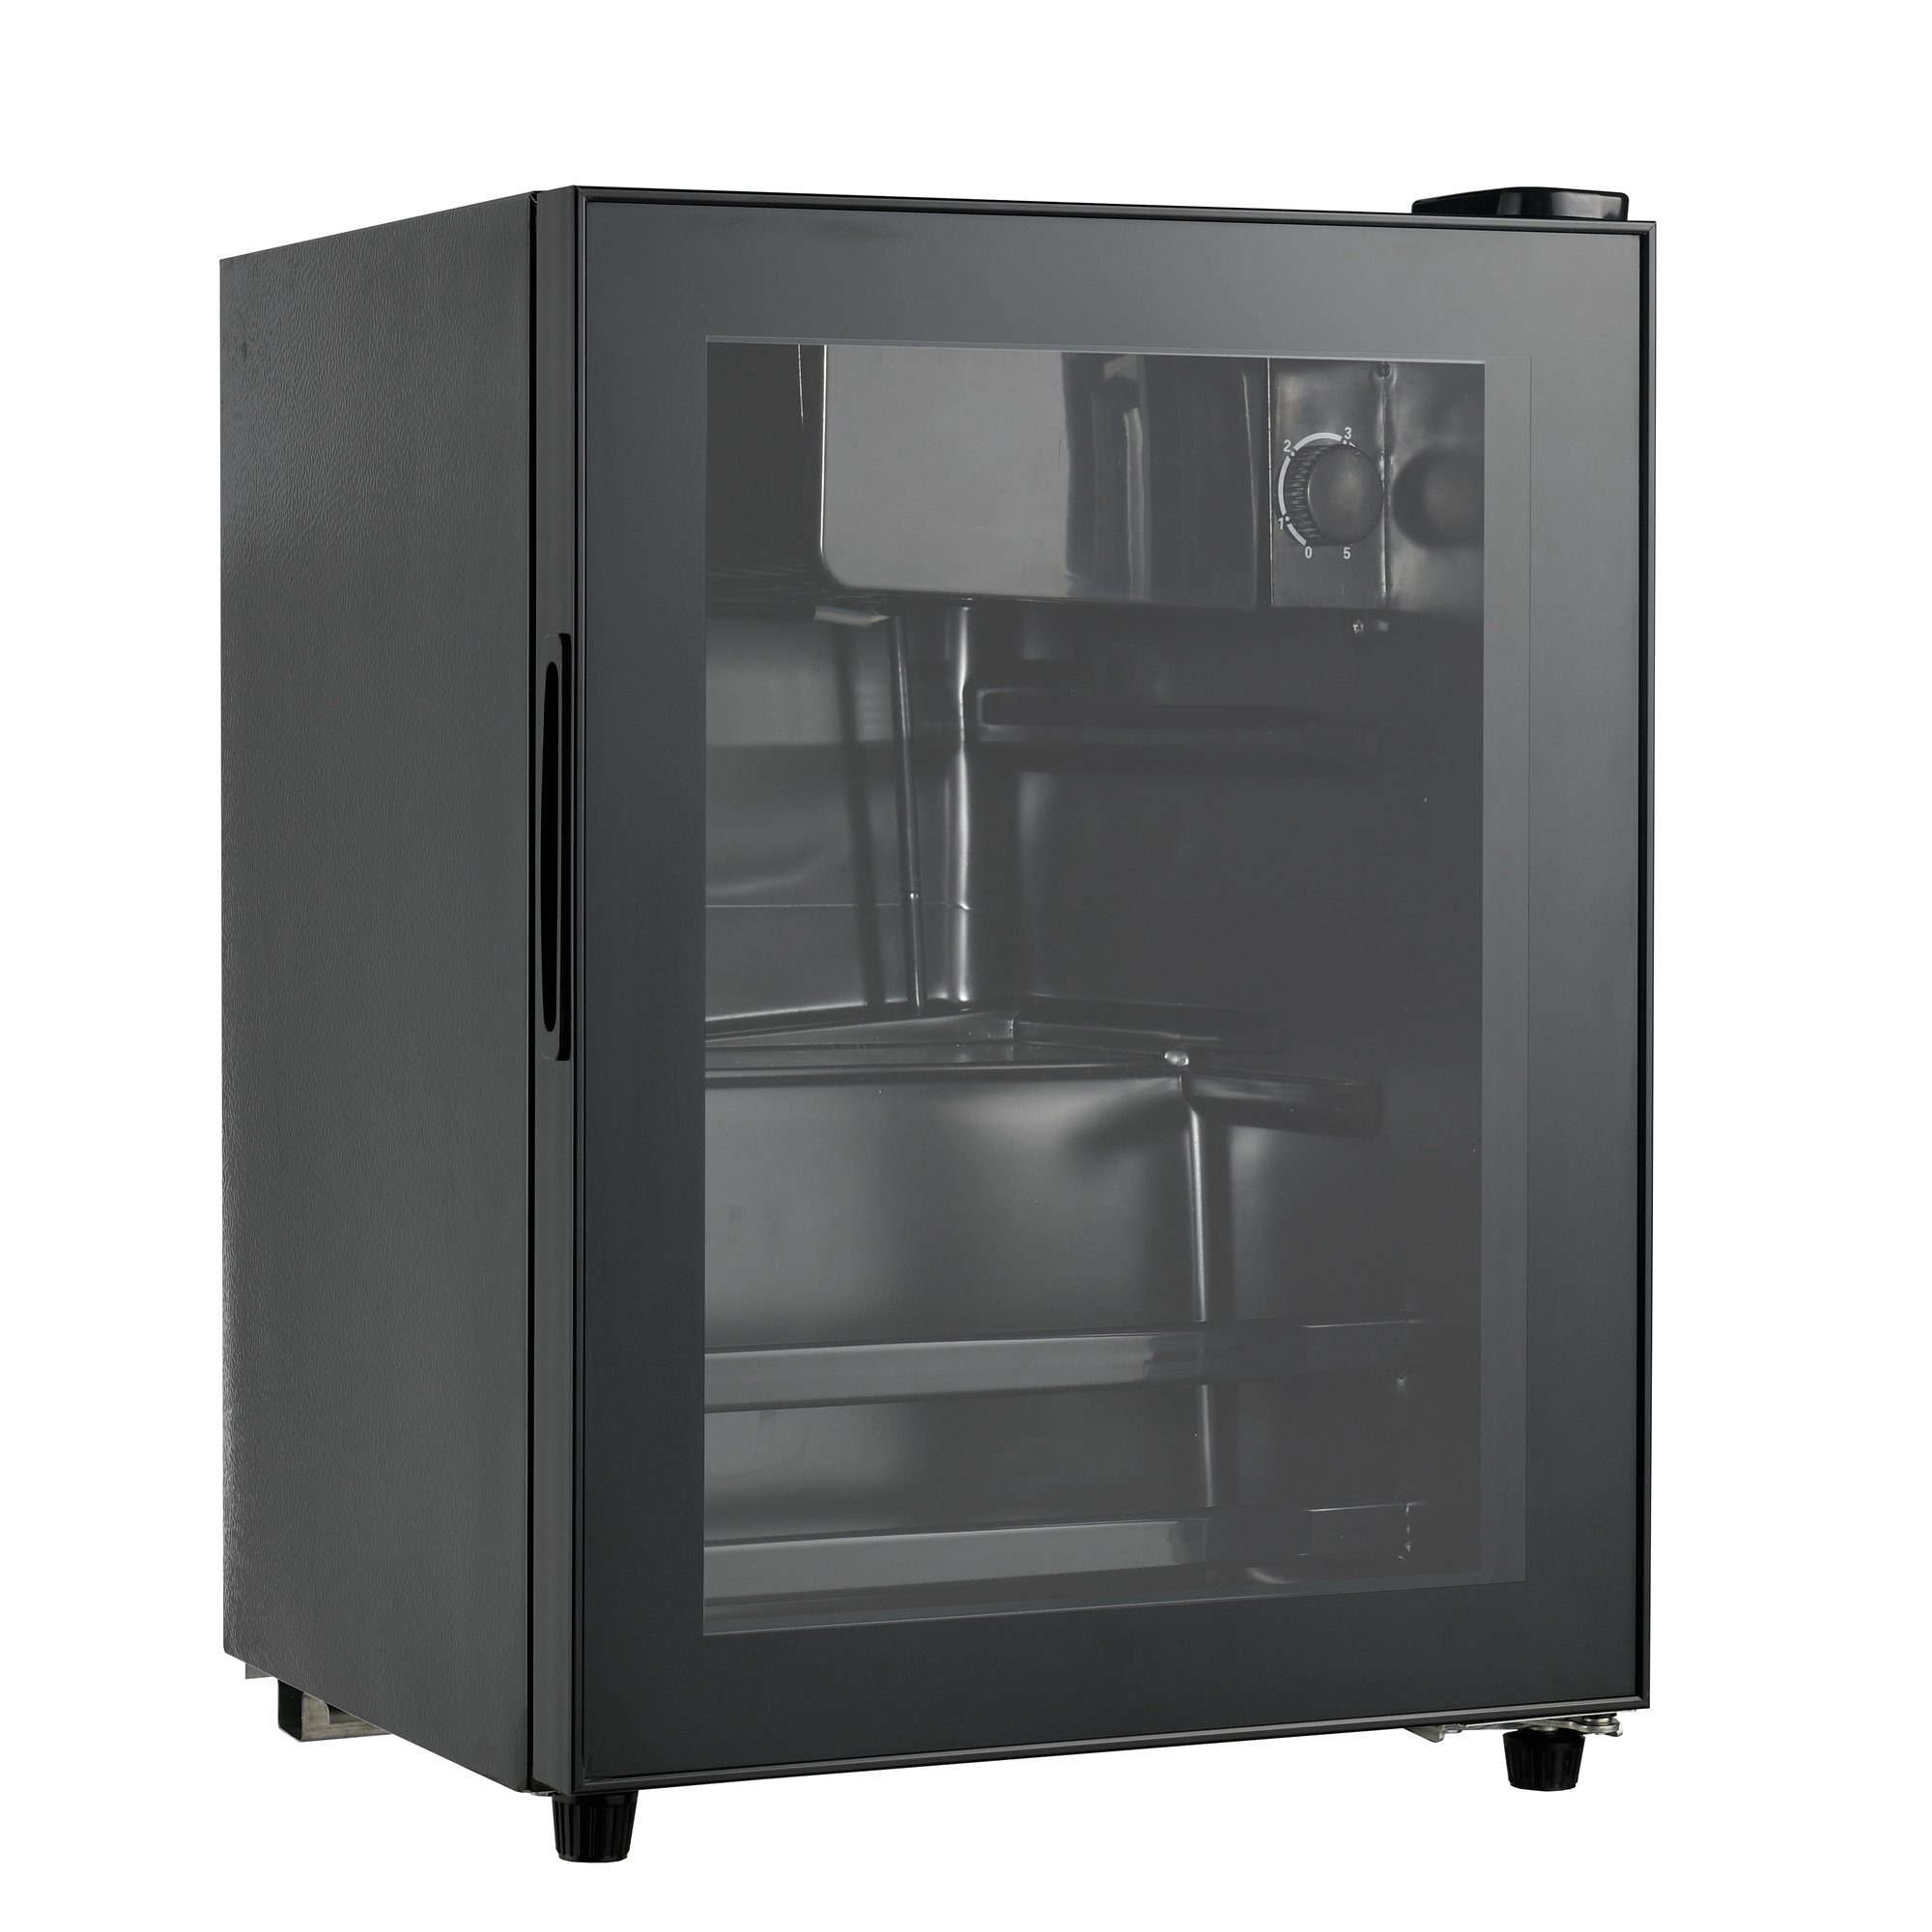 SC-55P, Getränkekühlschrank Dedom Betrieb Minikühlschrank,Kühlschrank,55L,energieeffizient,Leiser